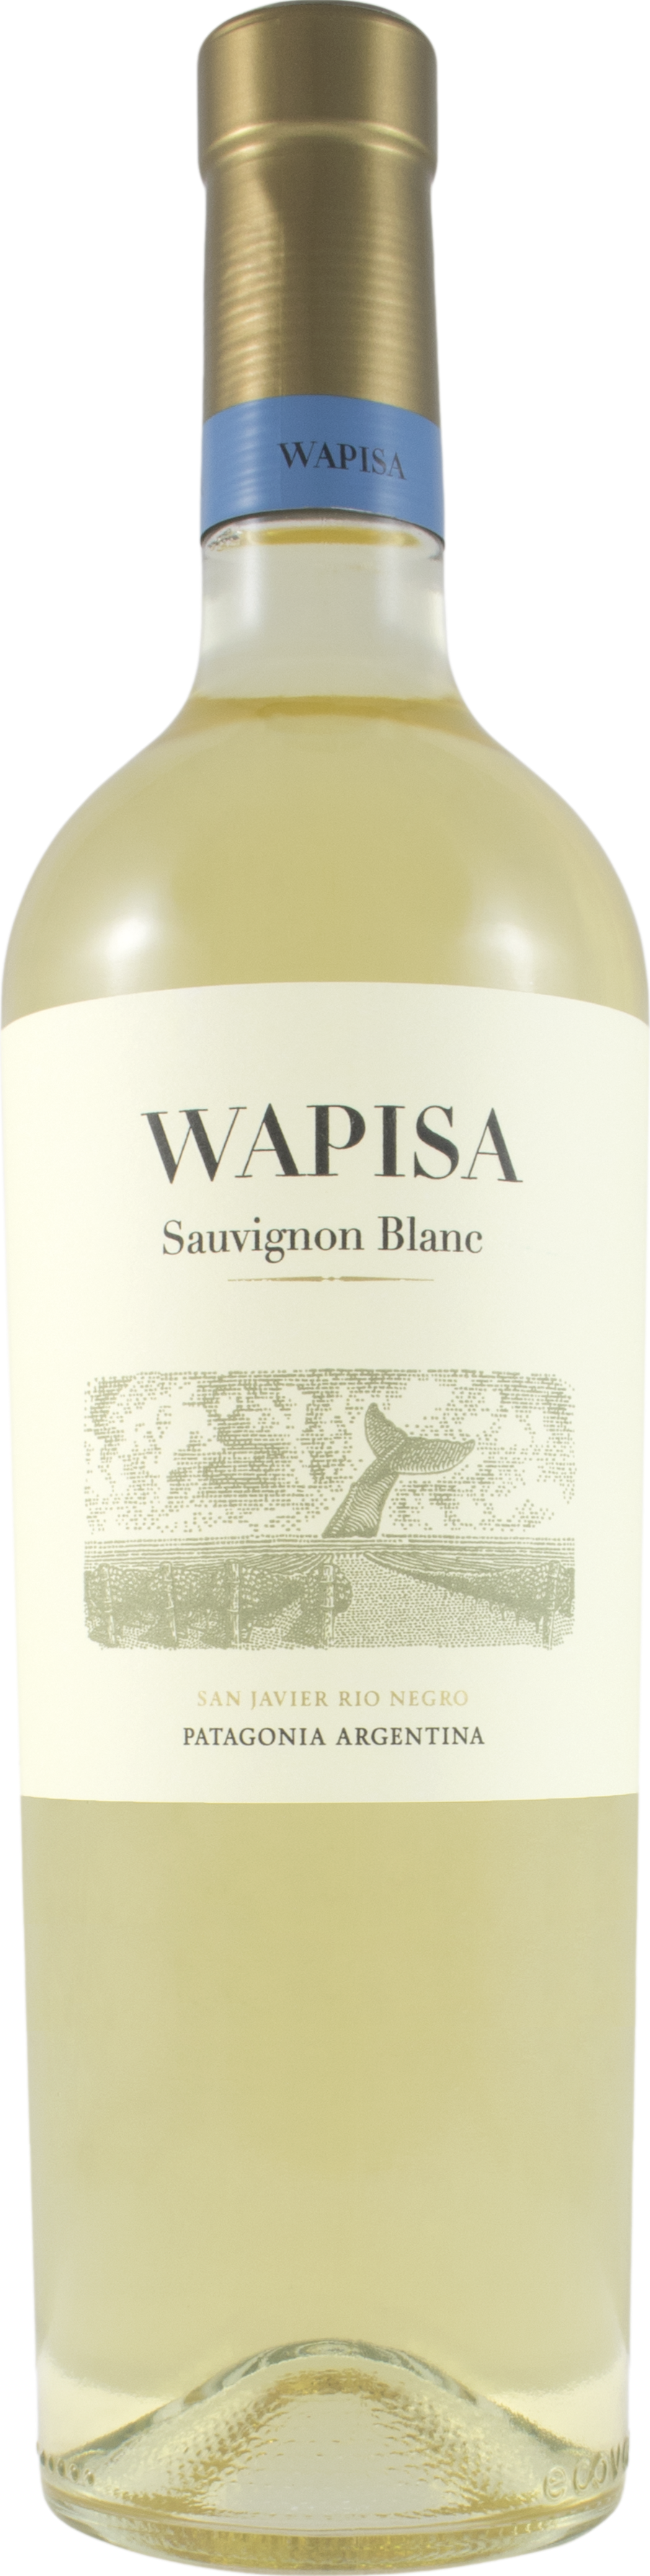 Product image of Wapisa Sauvignon Blanc 2021 from 8wines